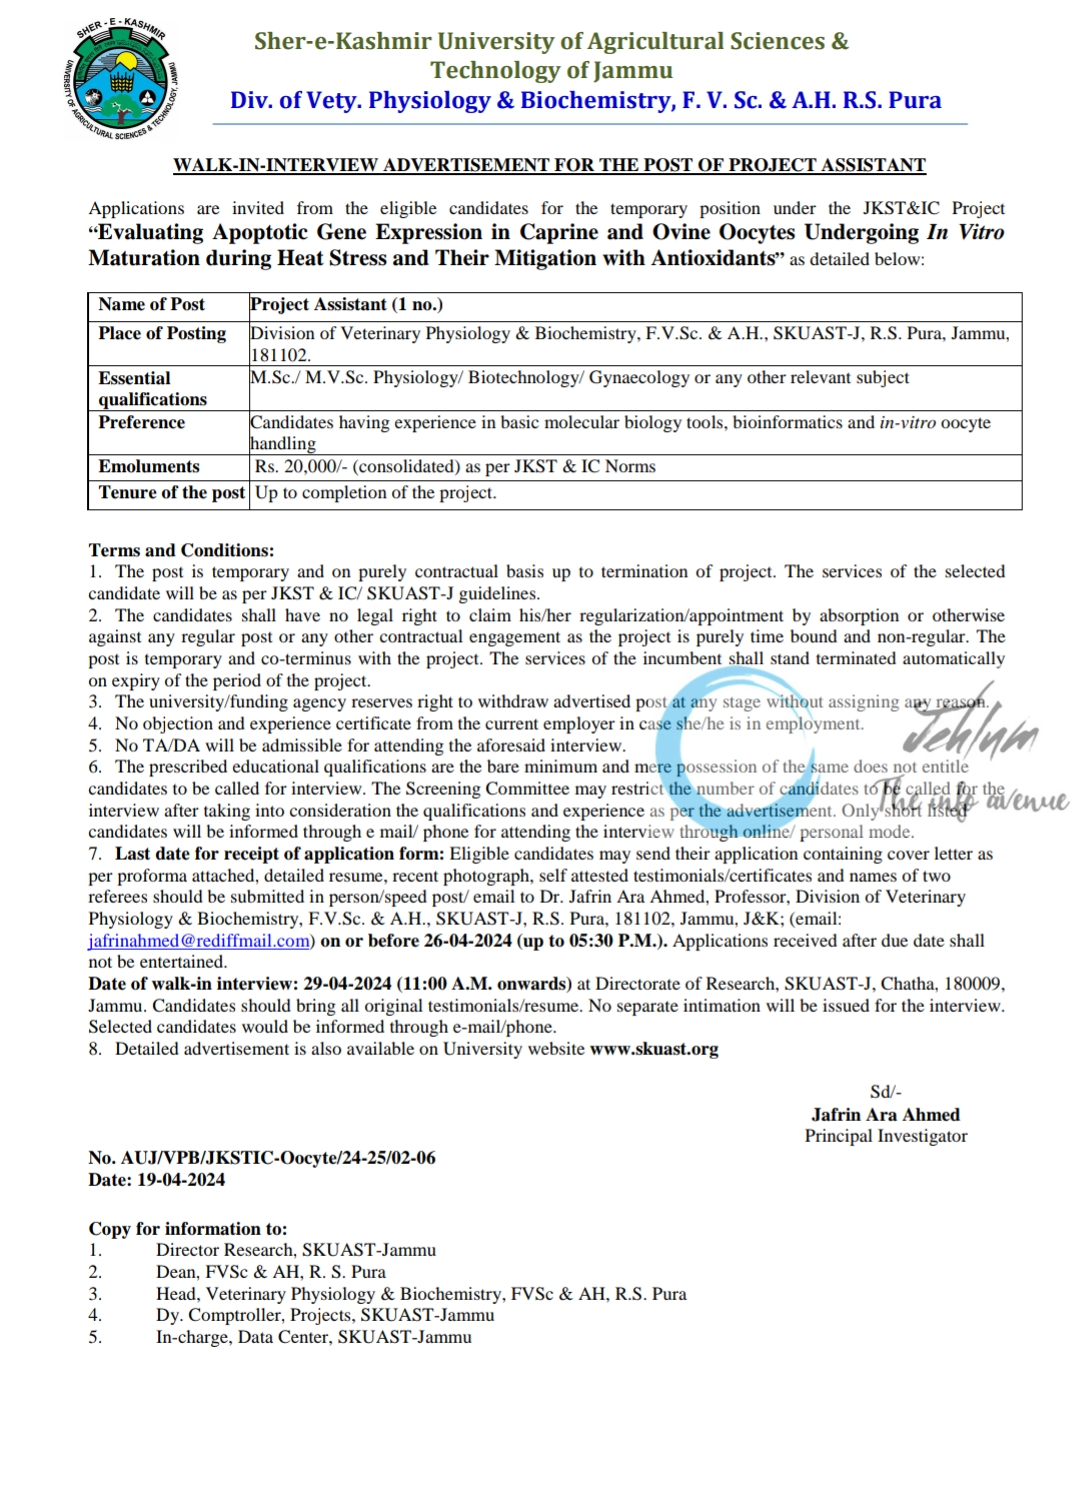 SKUAST-Jammu Div of Vety Physiology & Biochemistry Walk-in-interview Advertisement Notice 2024 